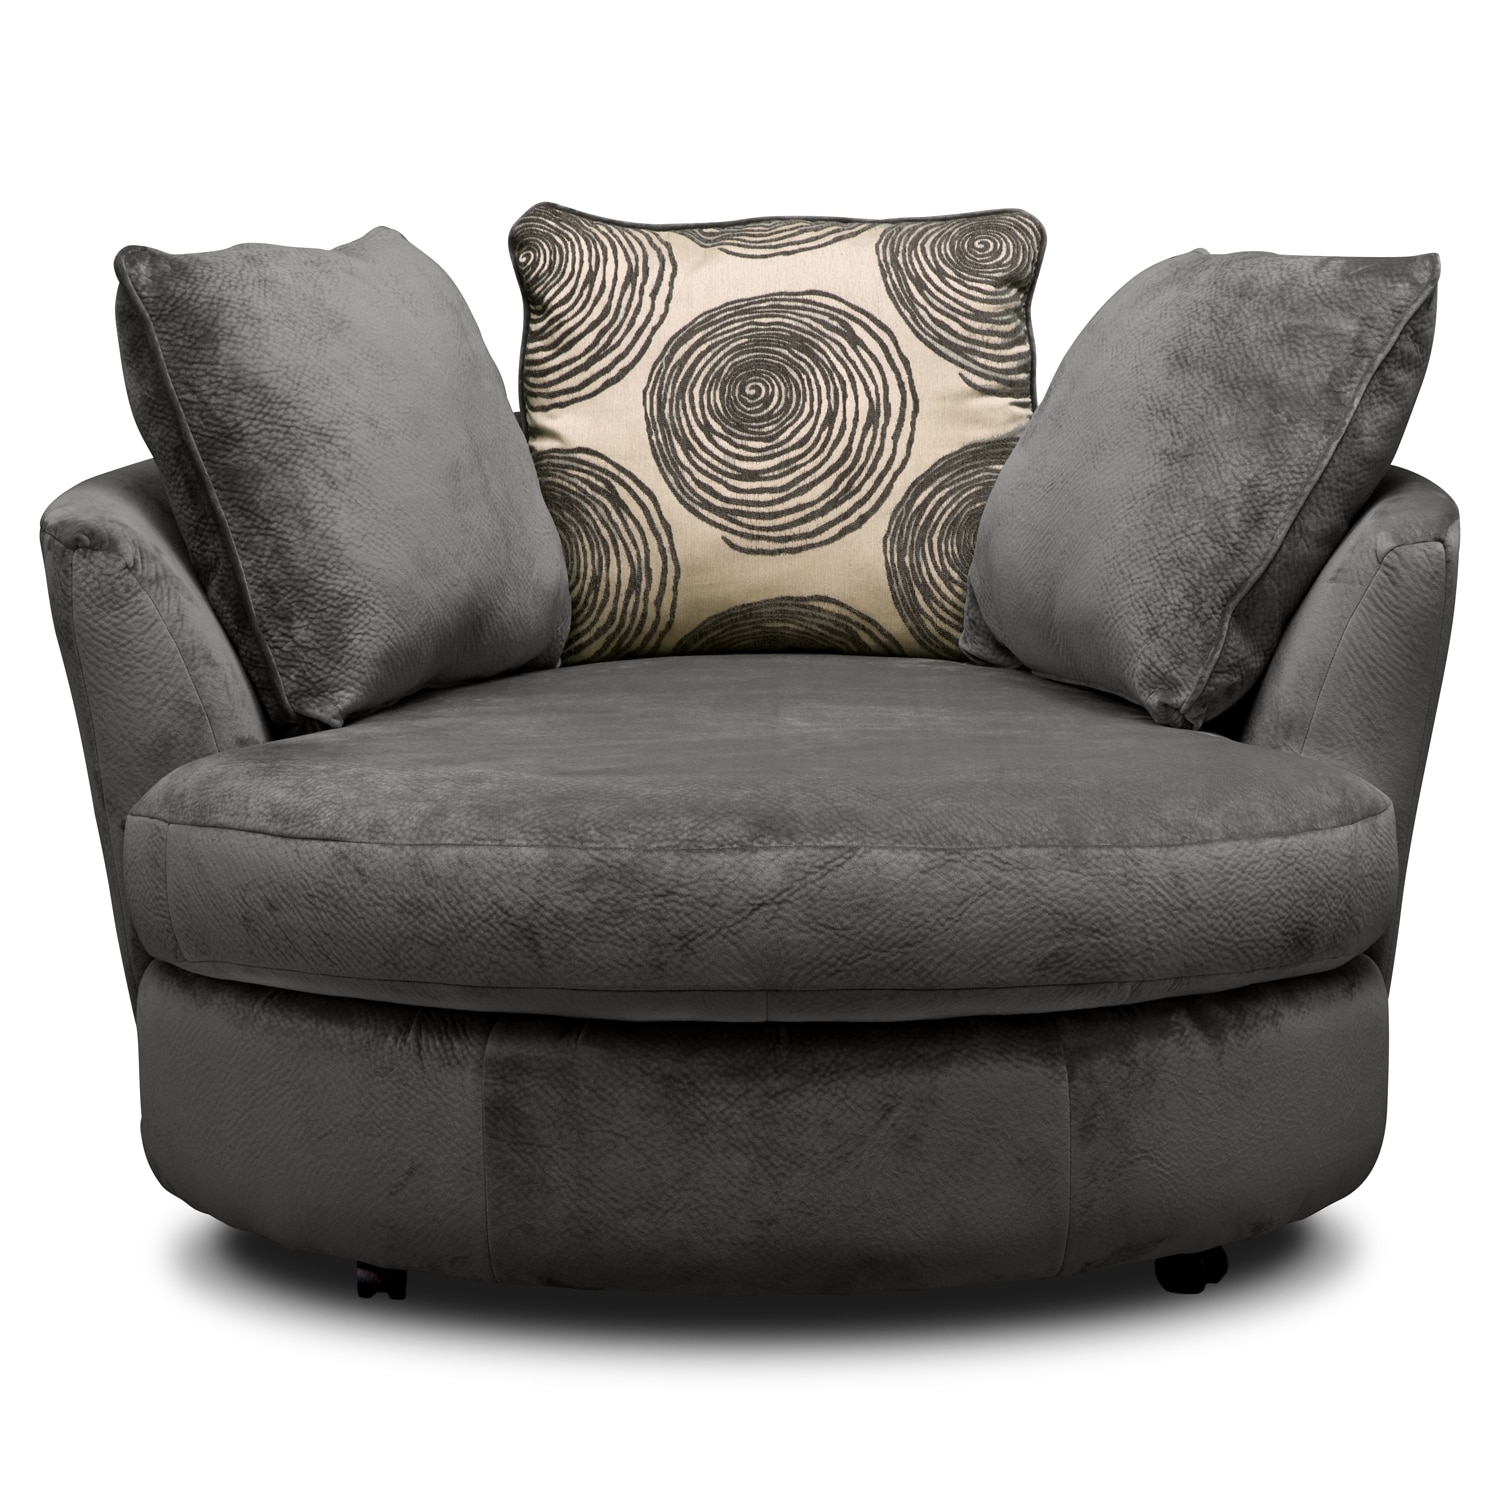 Cordoba Gray Upholstery Swivel Chair - Value City Furniture